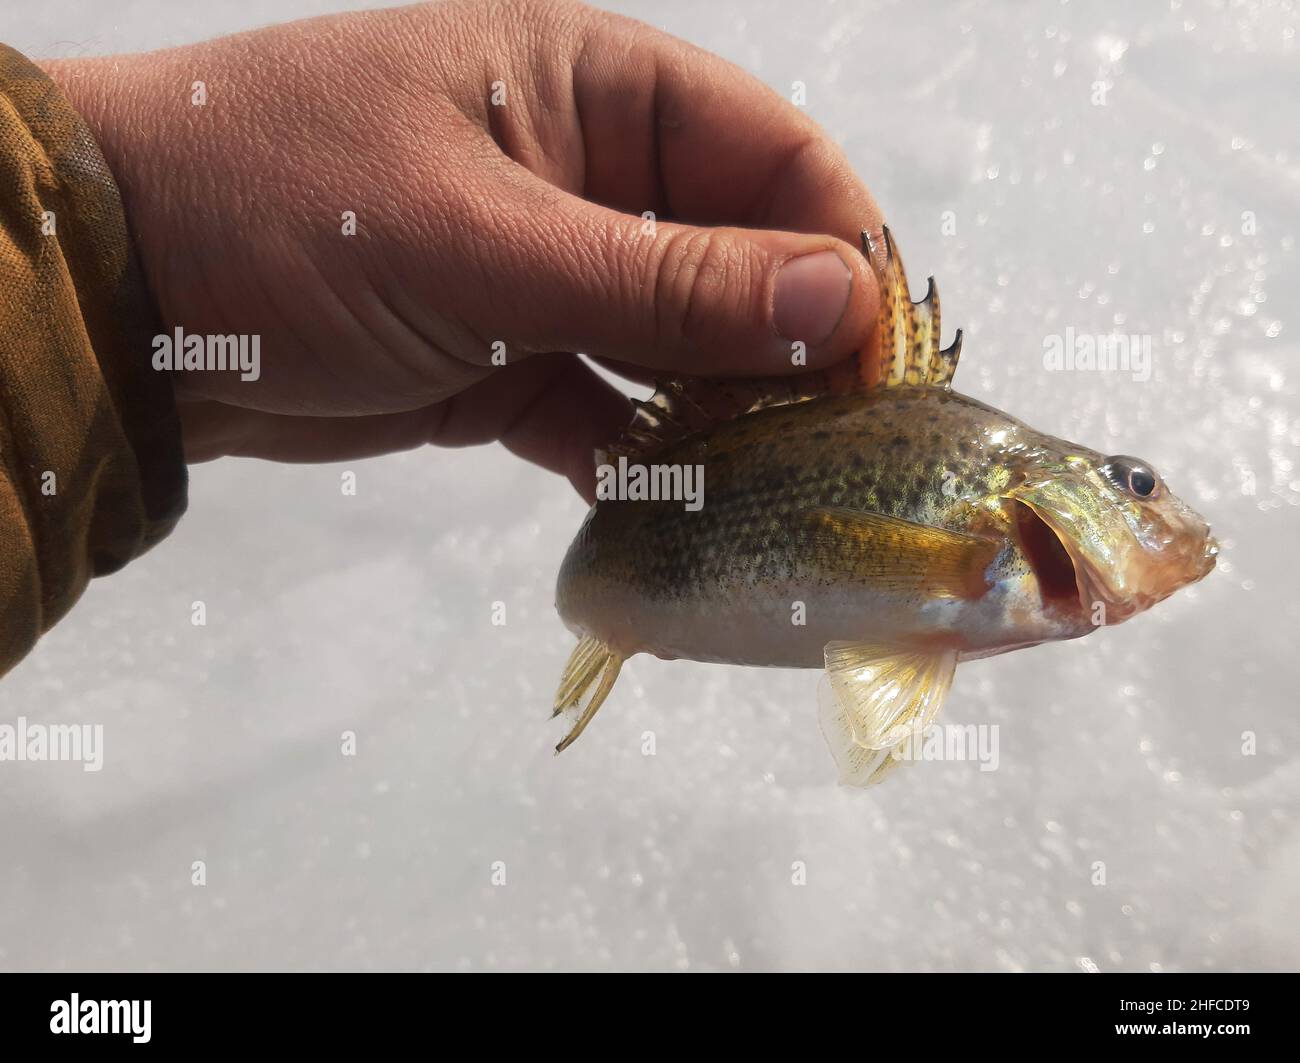 Ruff fish in hand. Blurred background. Stock Photo